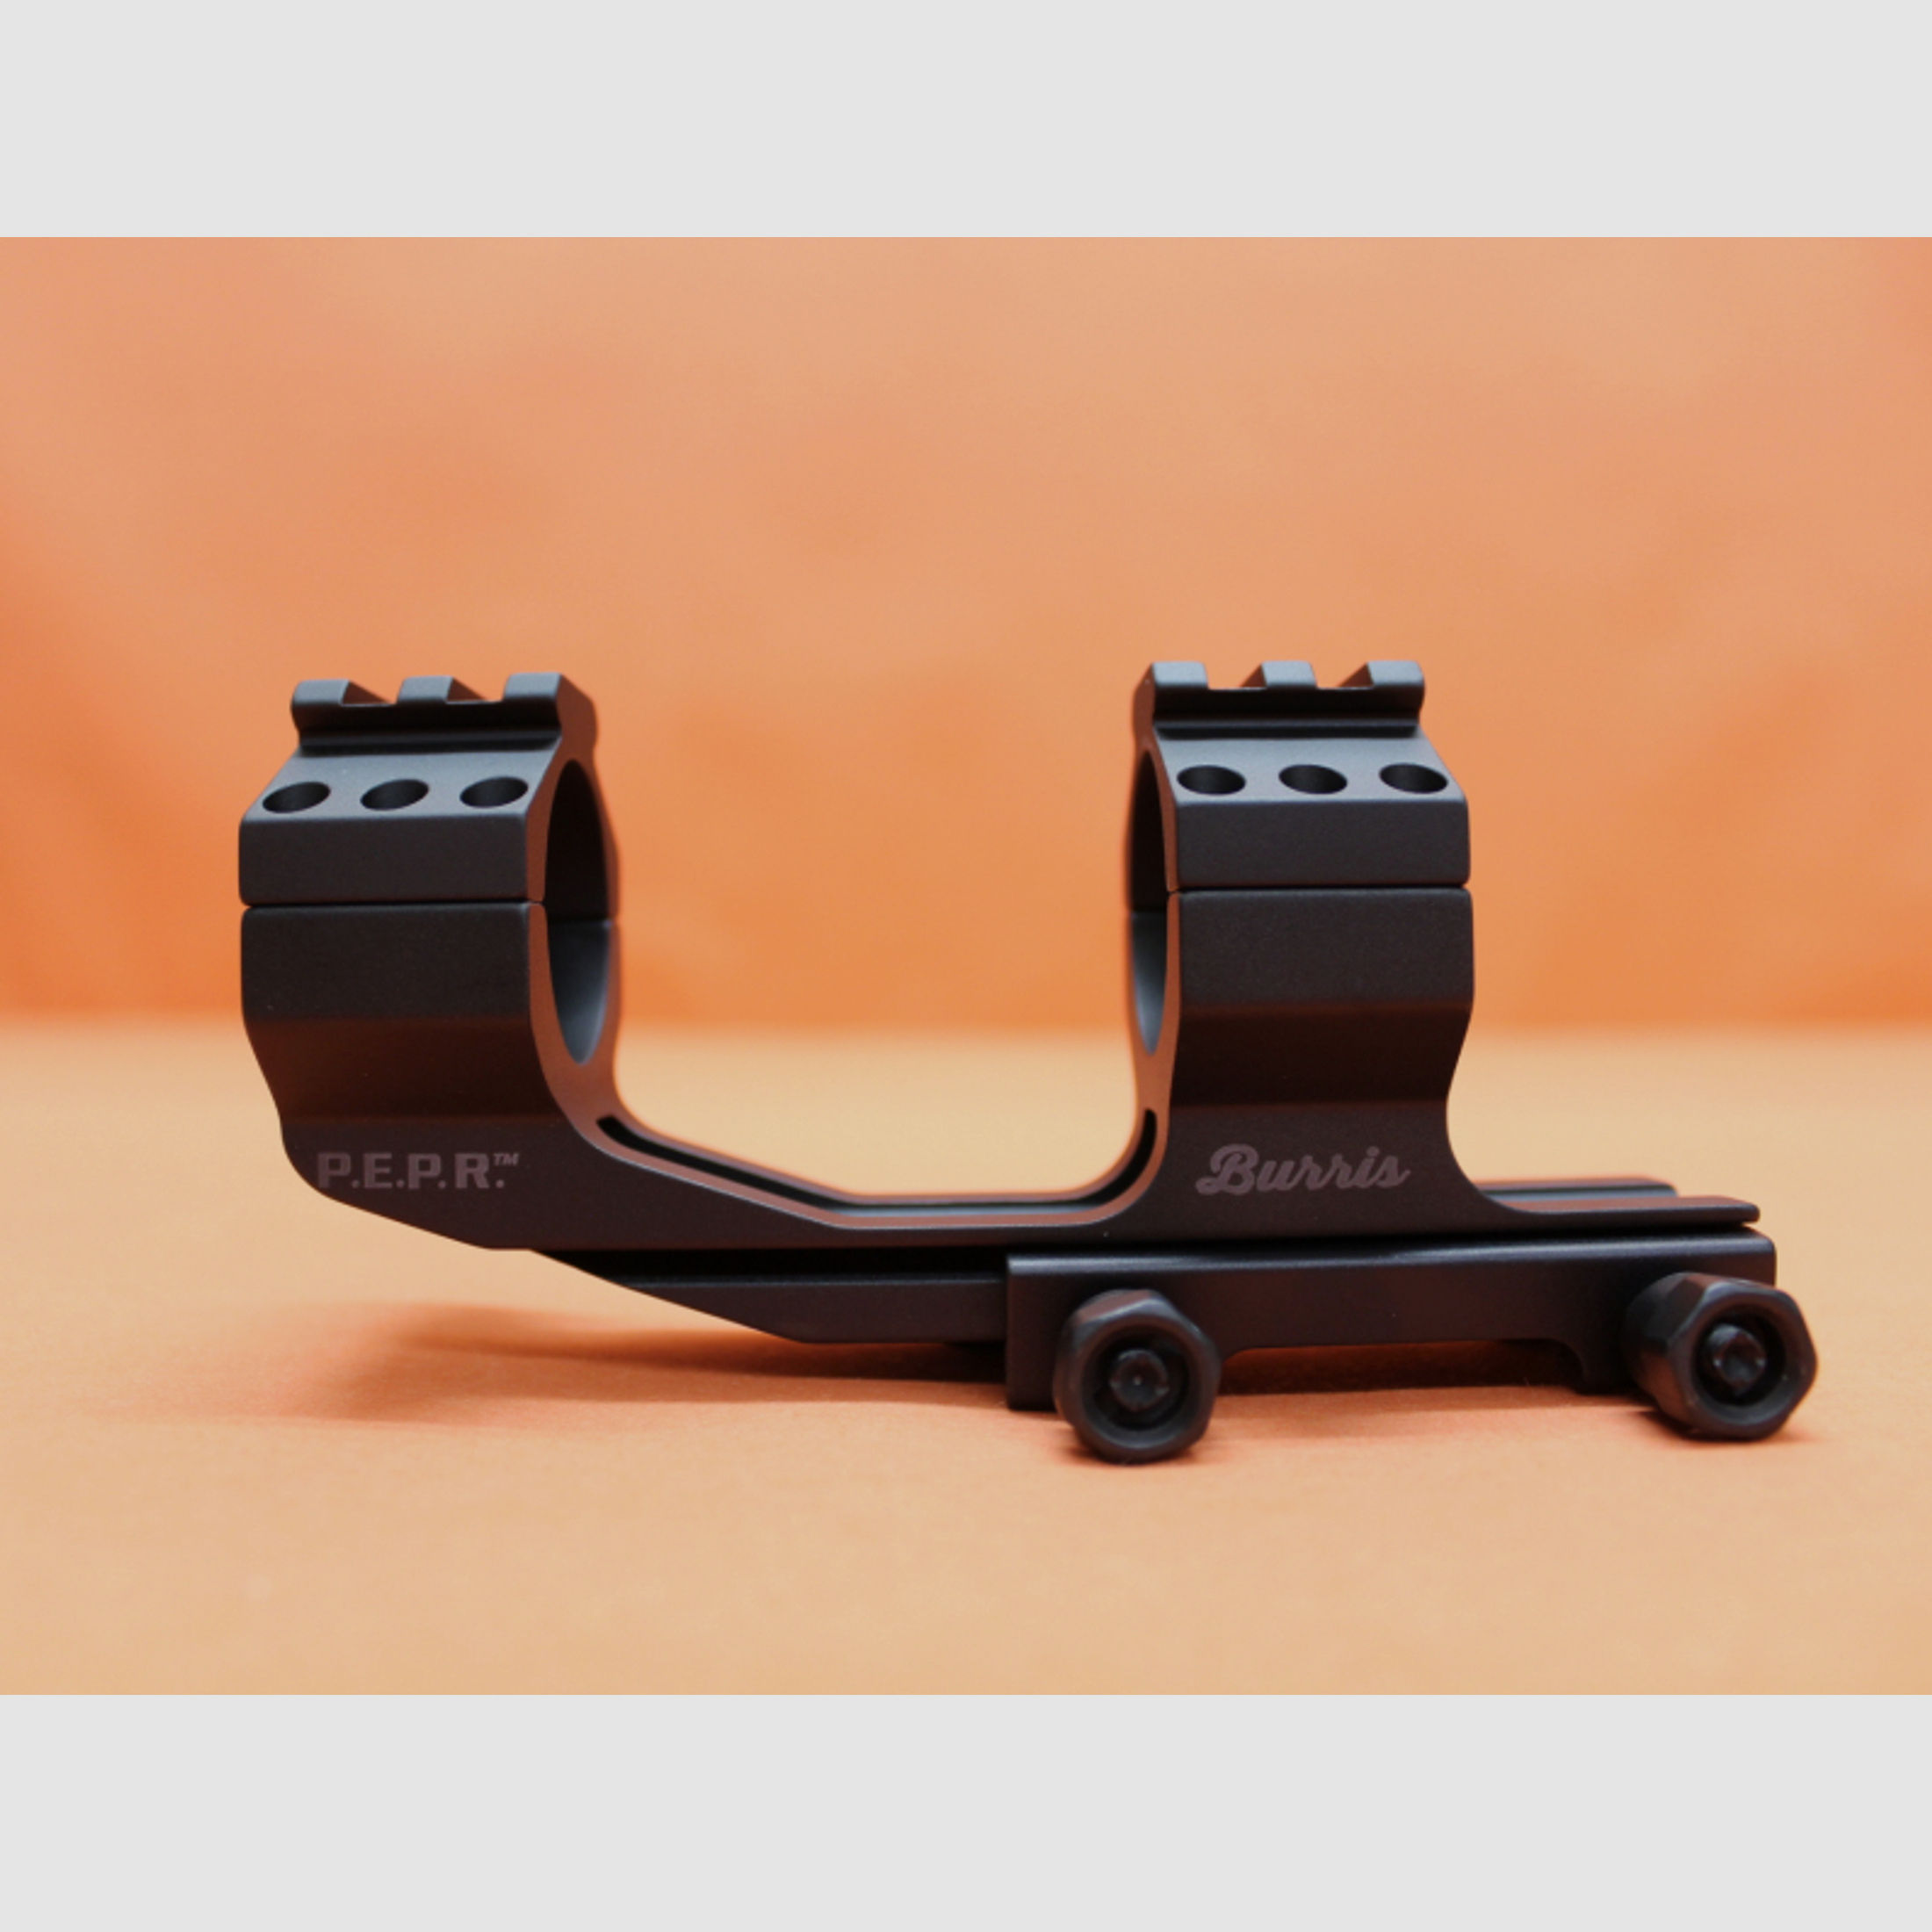 Burris AR-PEPR Blockmontage 30mm (410341) Alu schwarz für Picatinnyprofil BH=1"/ 25,4mm